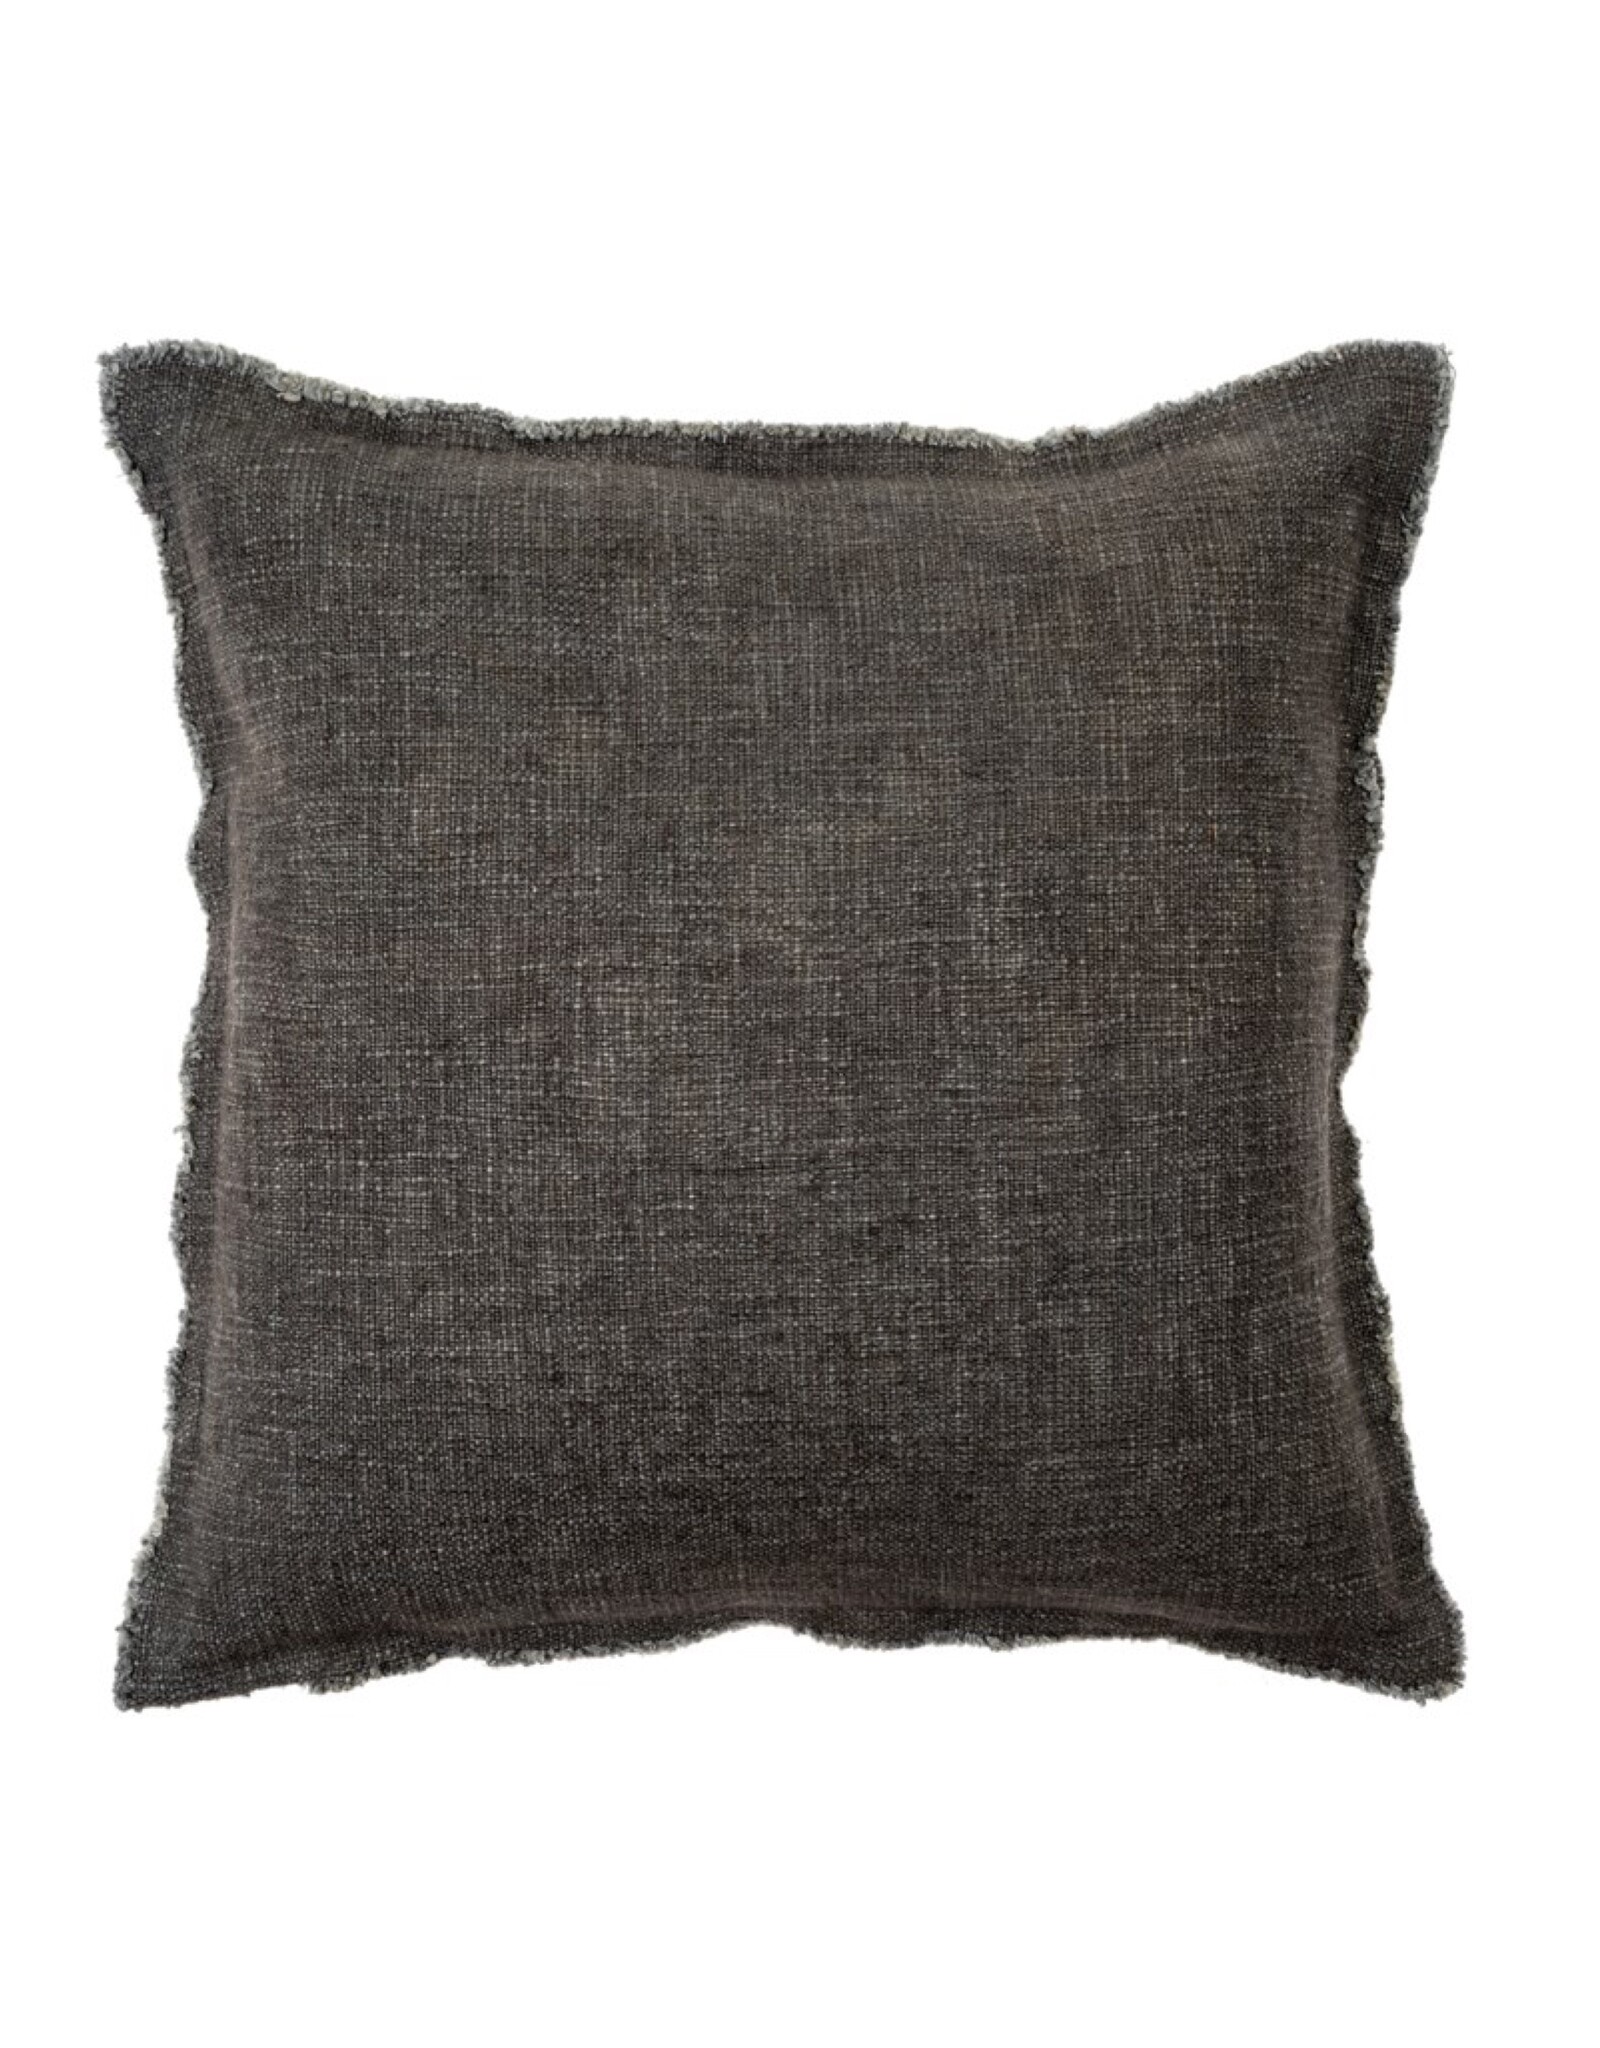 Indaba Cushions Indaba Selena Linen Dark Grey 20 x 20 1-3197-C